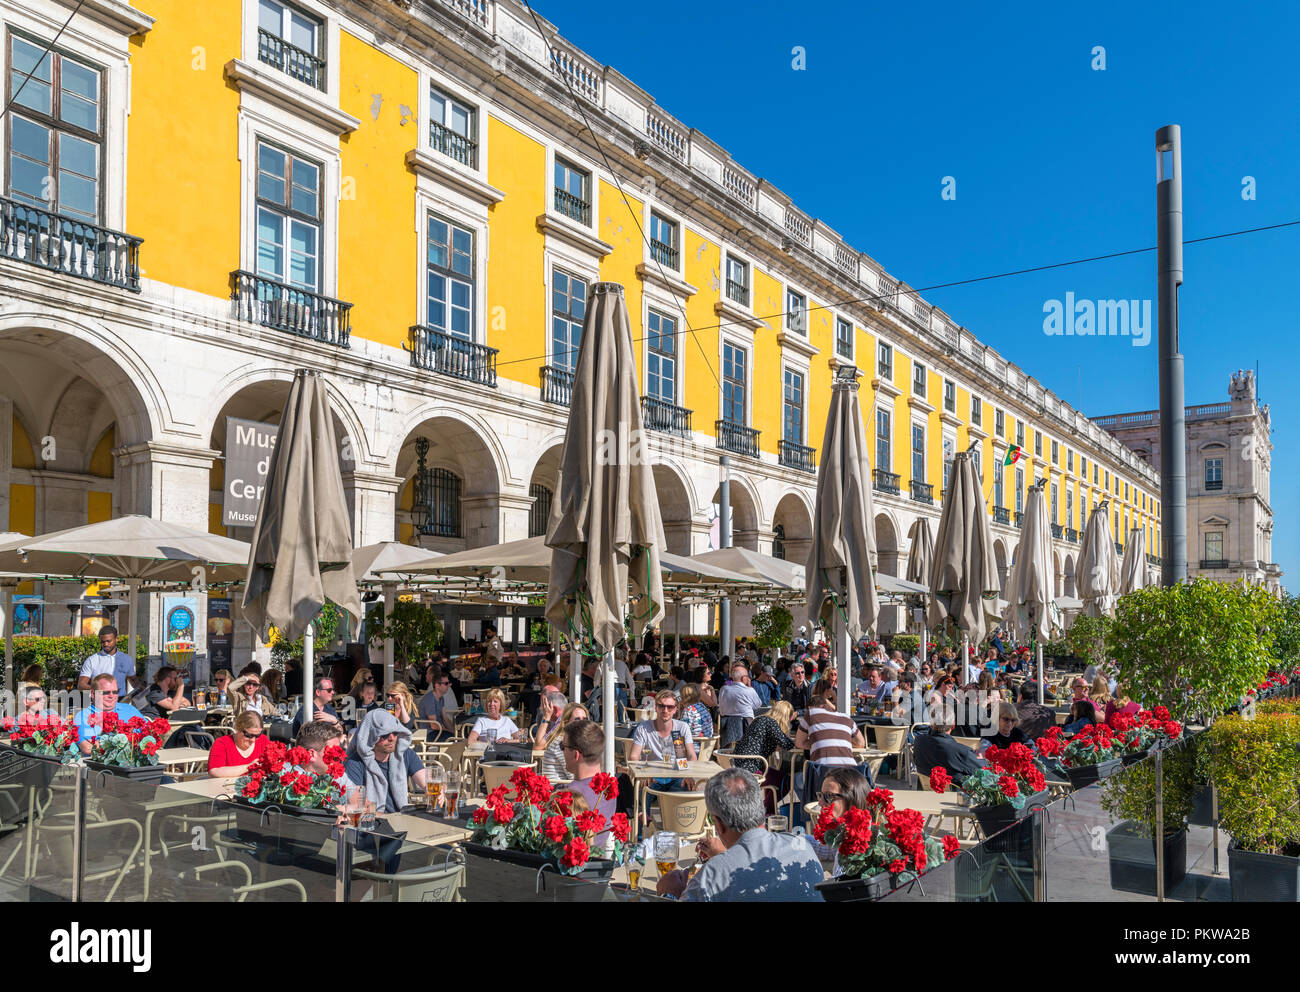 Sidewalk cafe in front of the Museu da Cerveja (Beer Museum), Praca do Comercio, Lisbon, Portugal Stock Photo